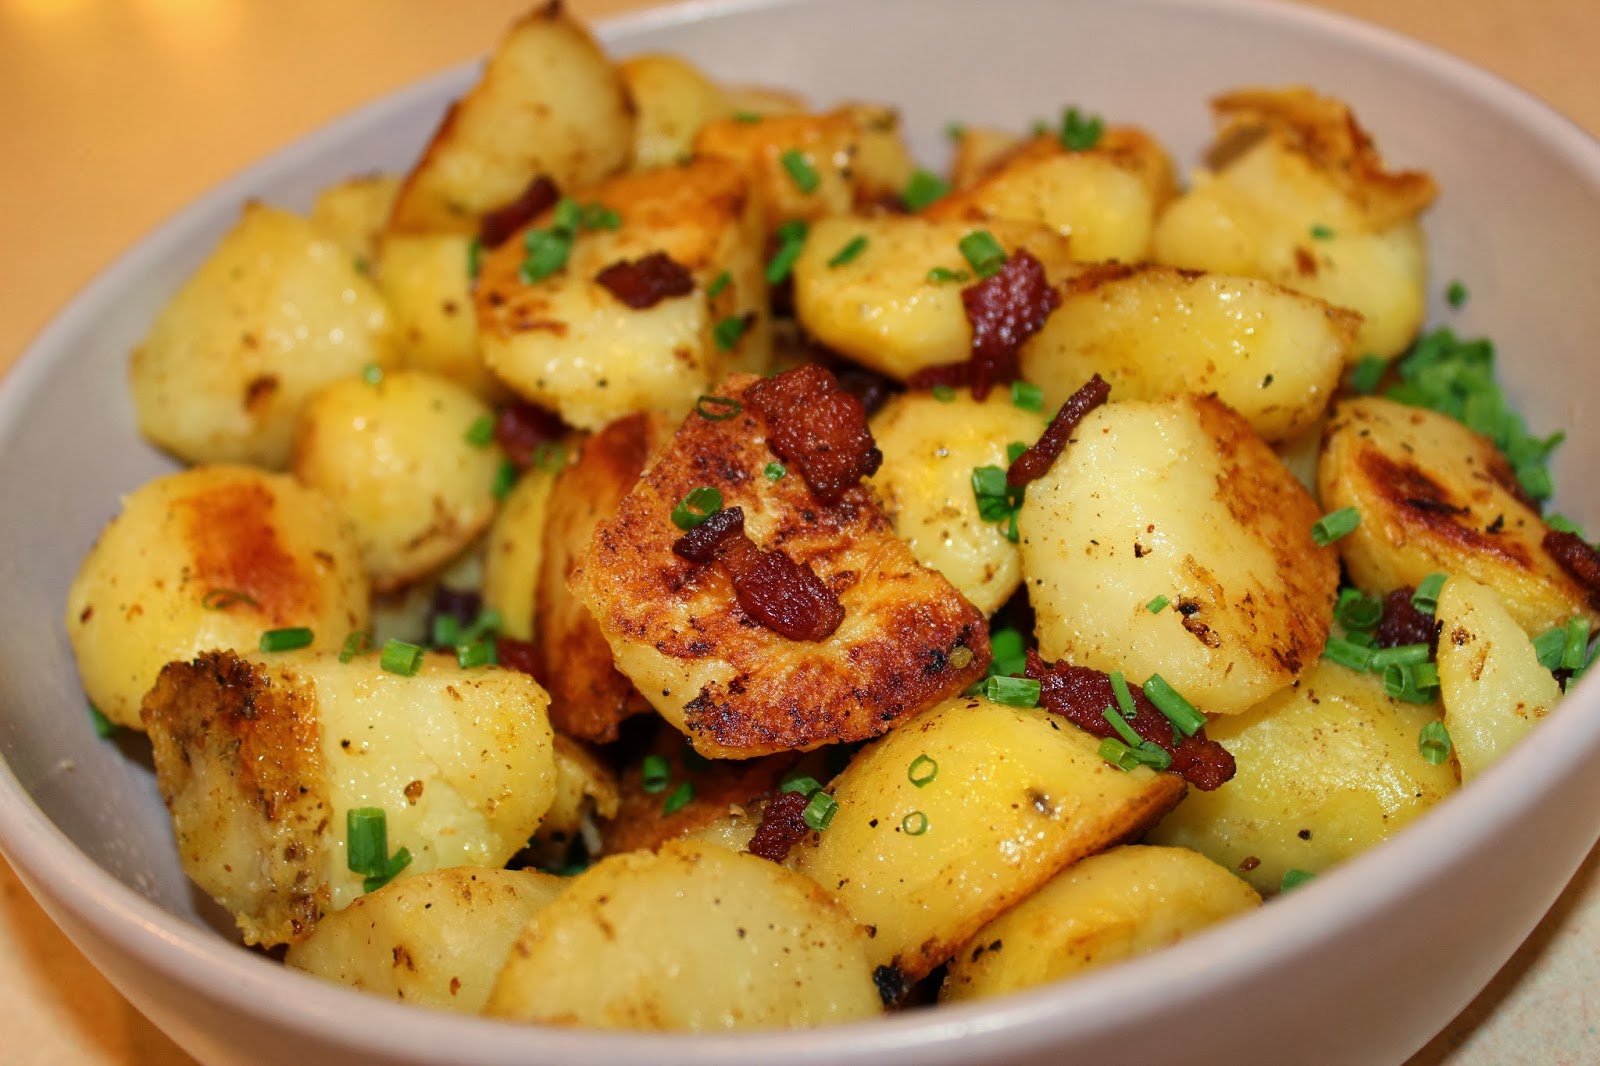 Can i steam potatoes for potato salad фото 99